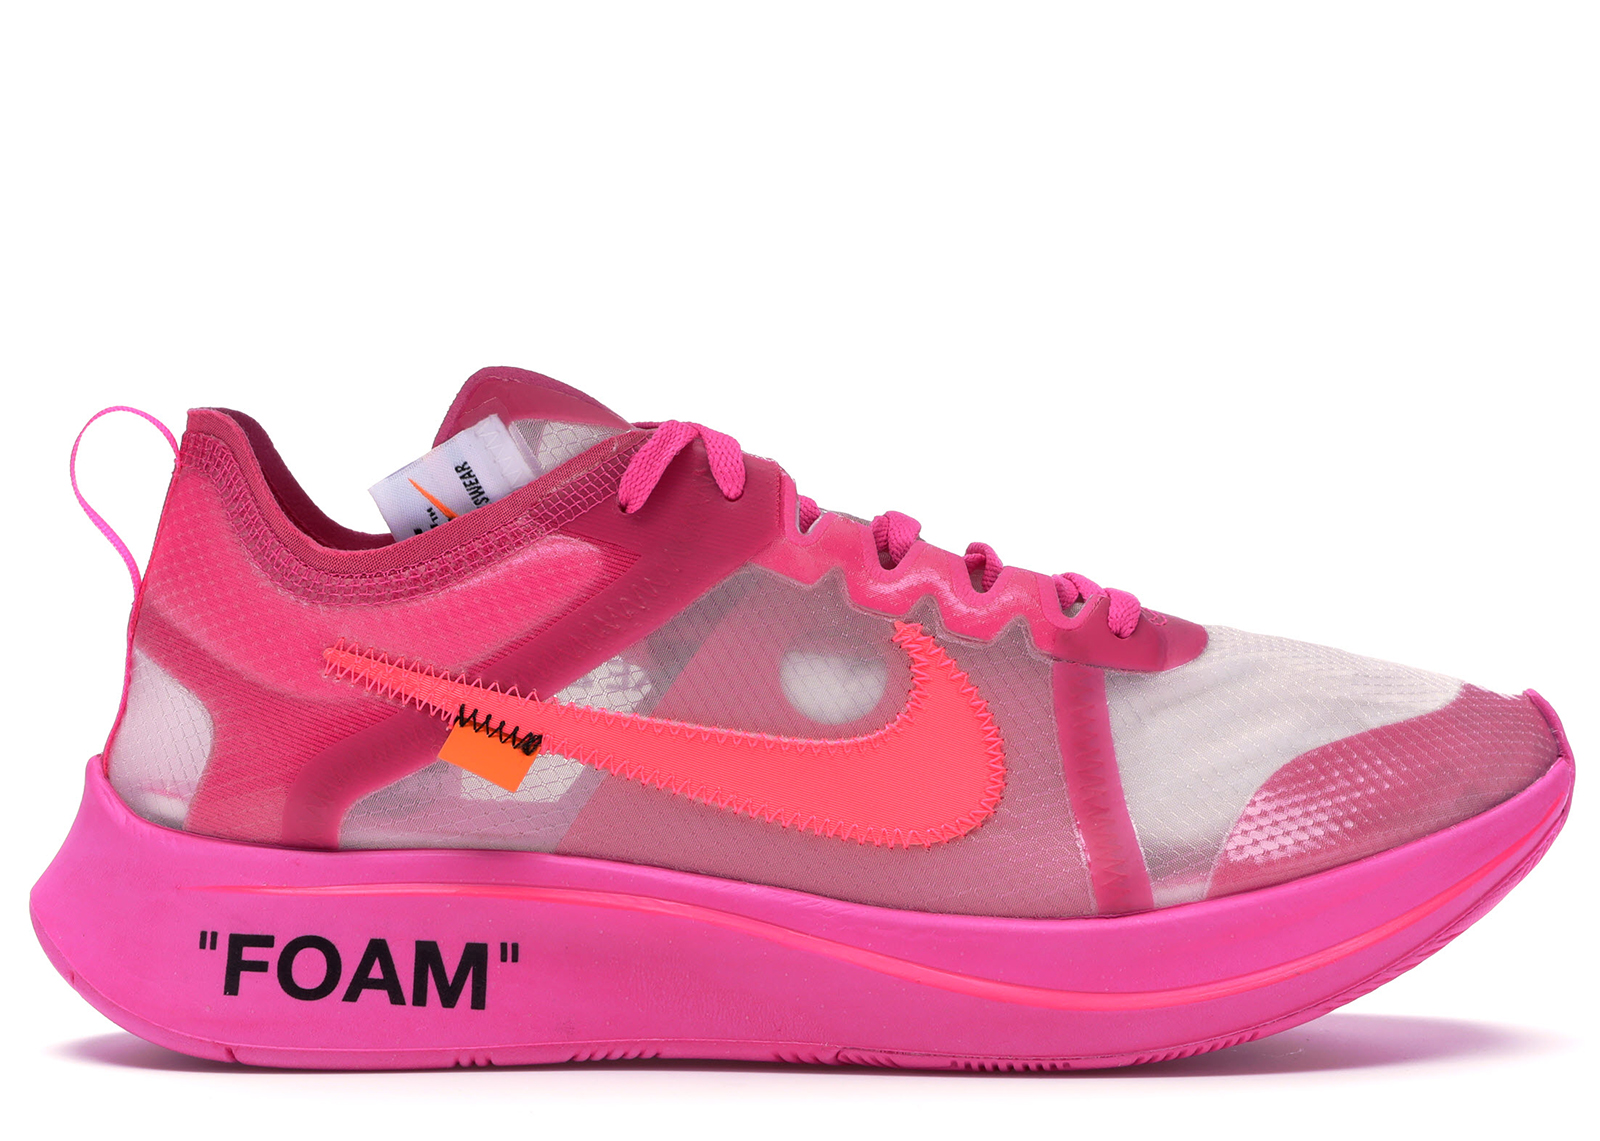 Nike Zoom Fly Off-White Pink Men's - AJ4588-600 - US